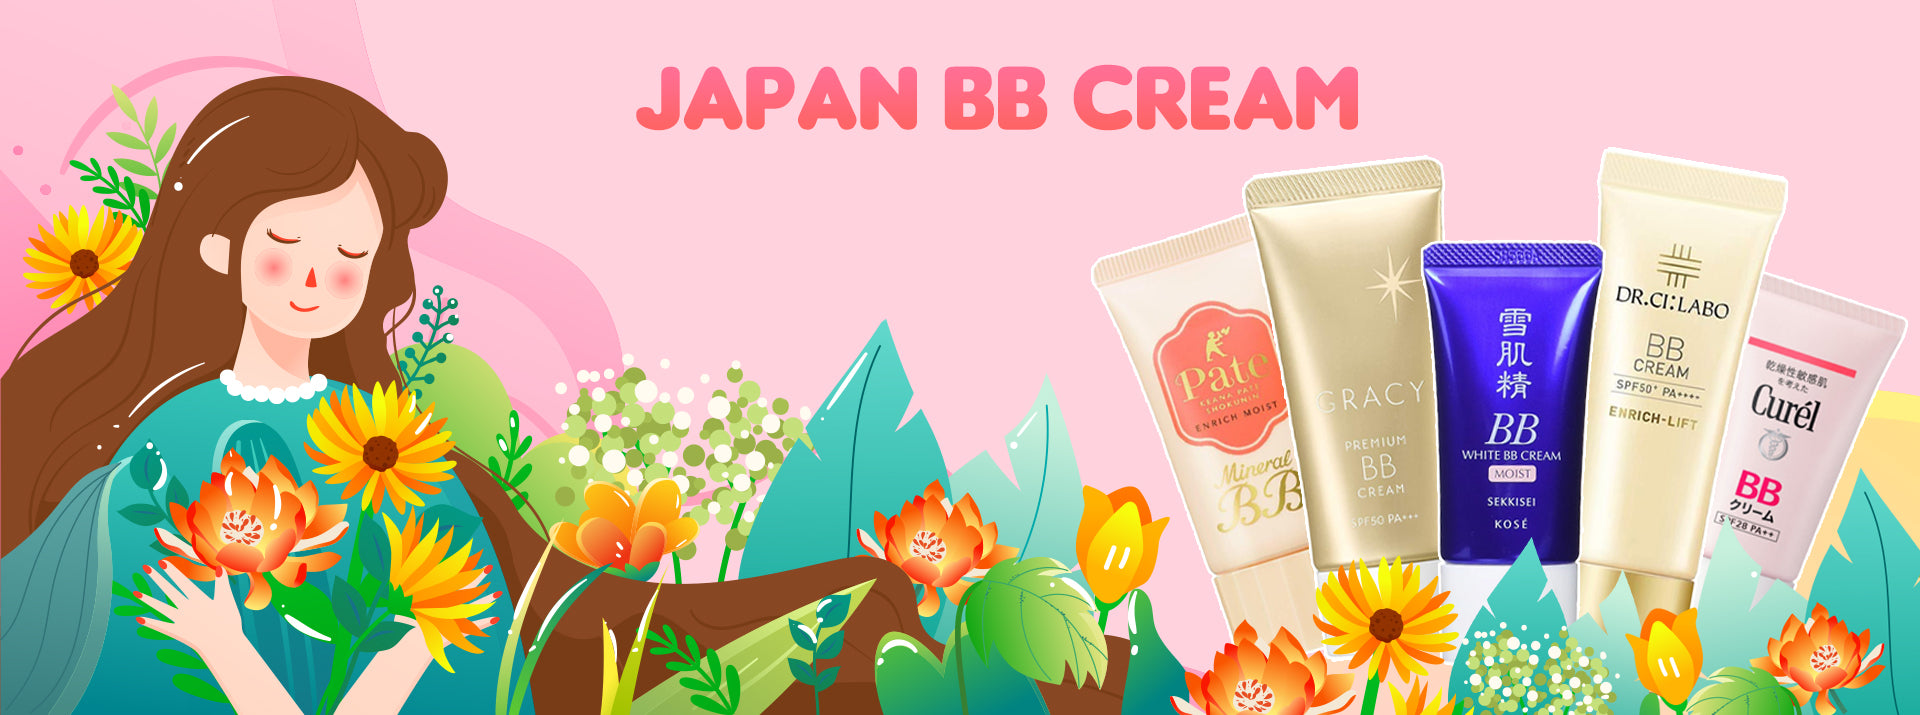 BB Cream Au Ginseng- United States